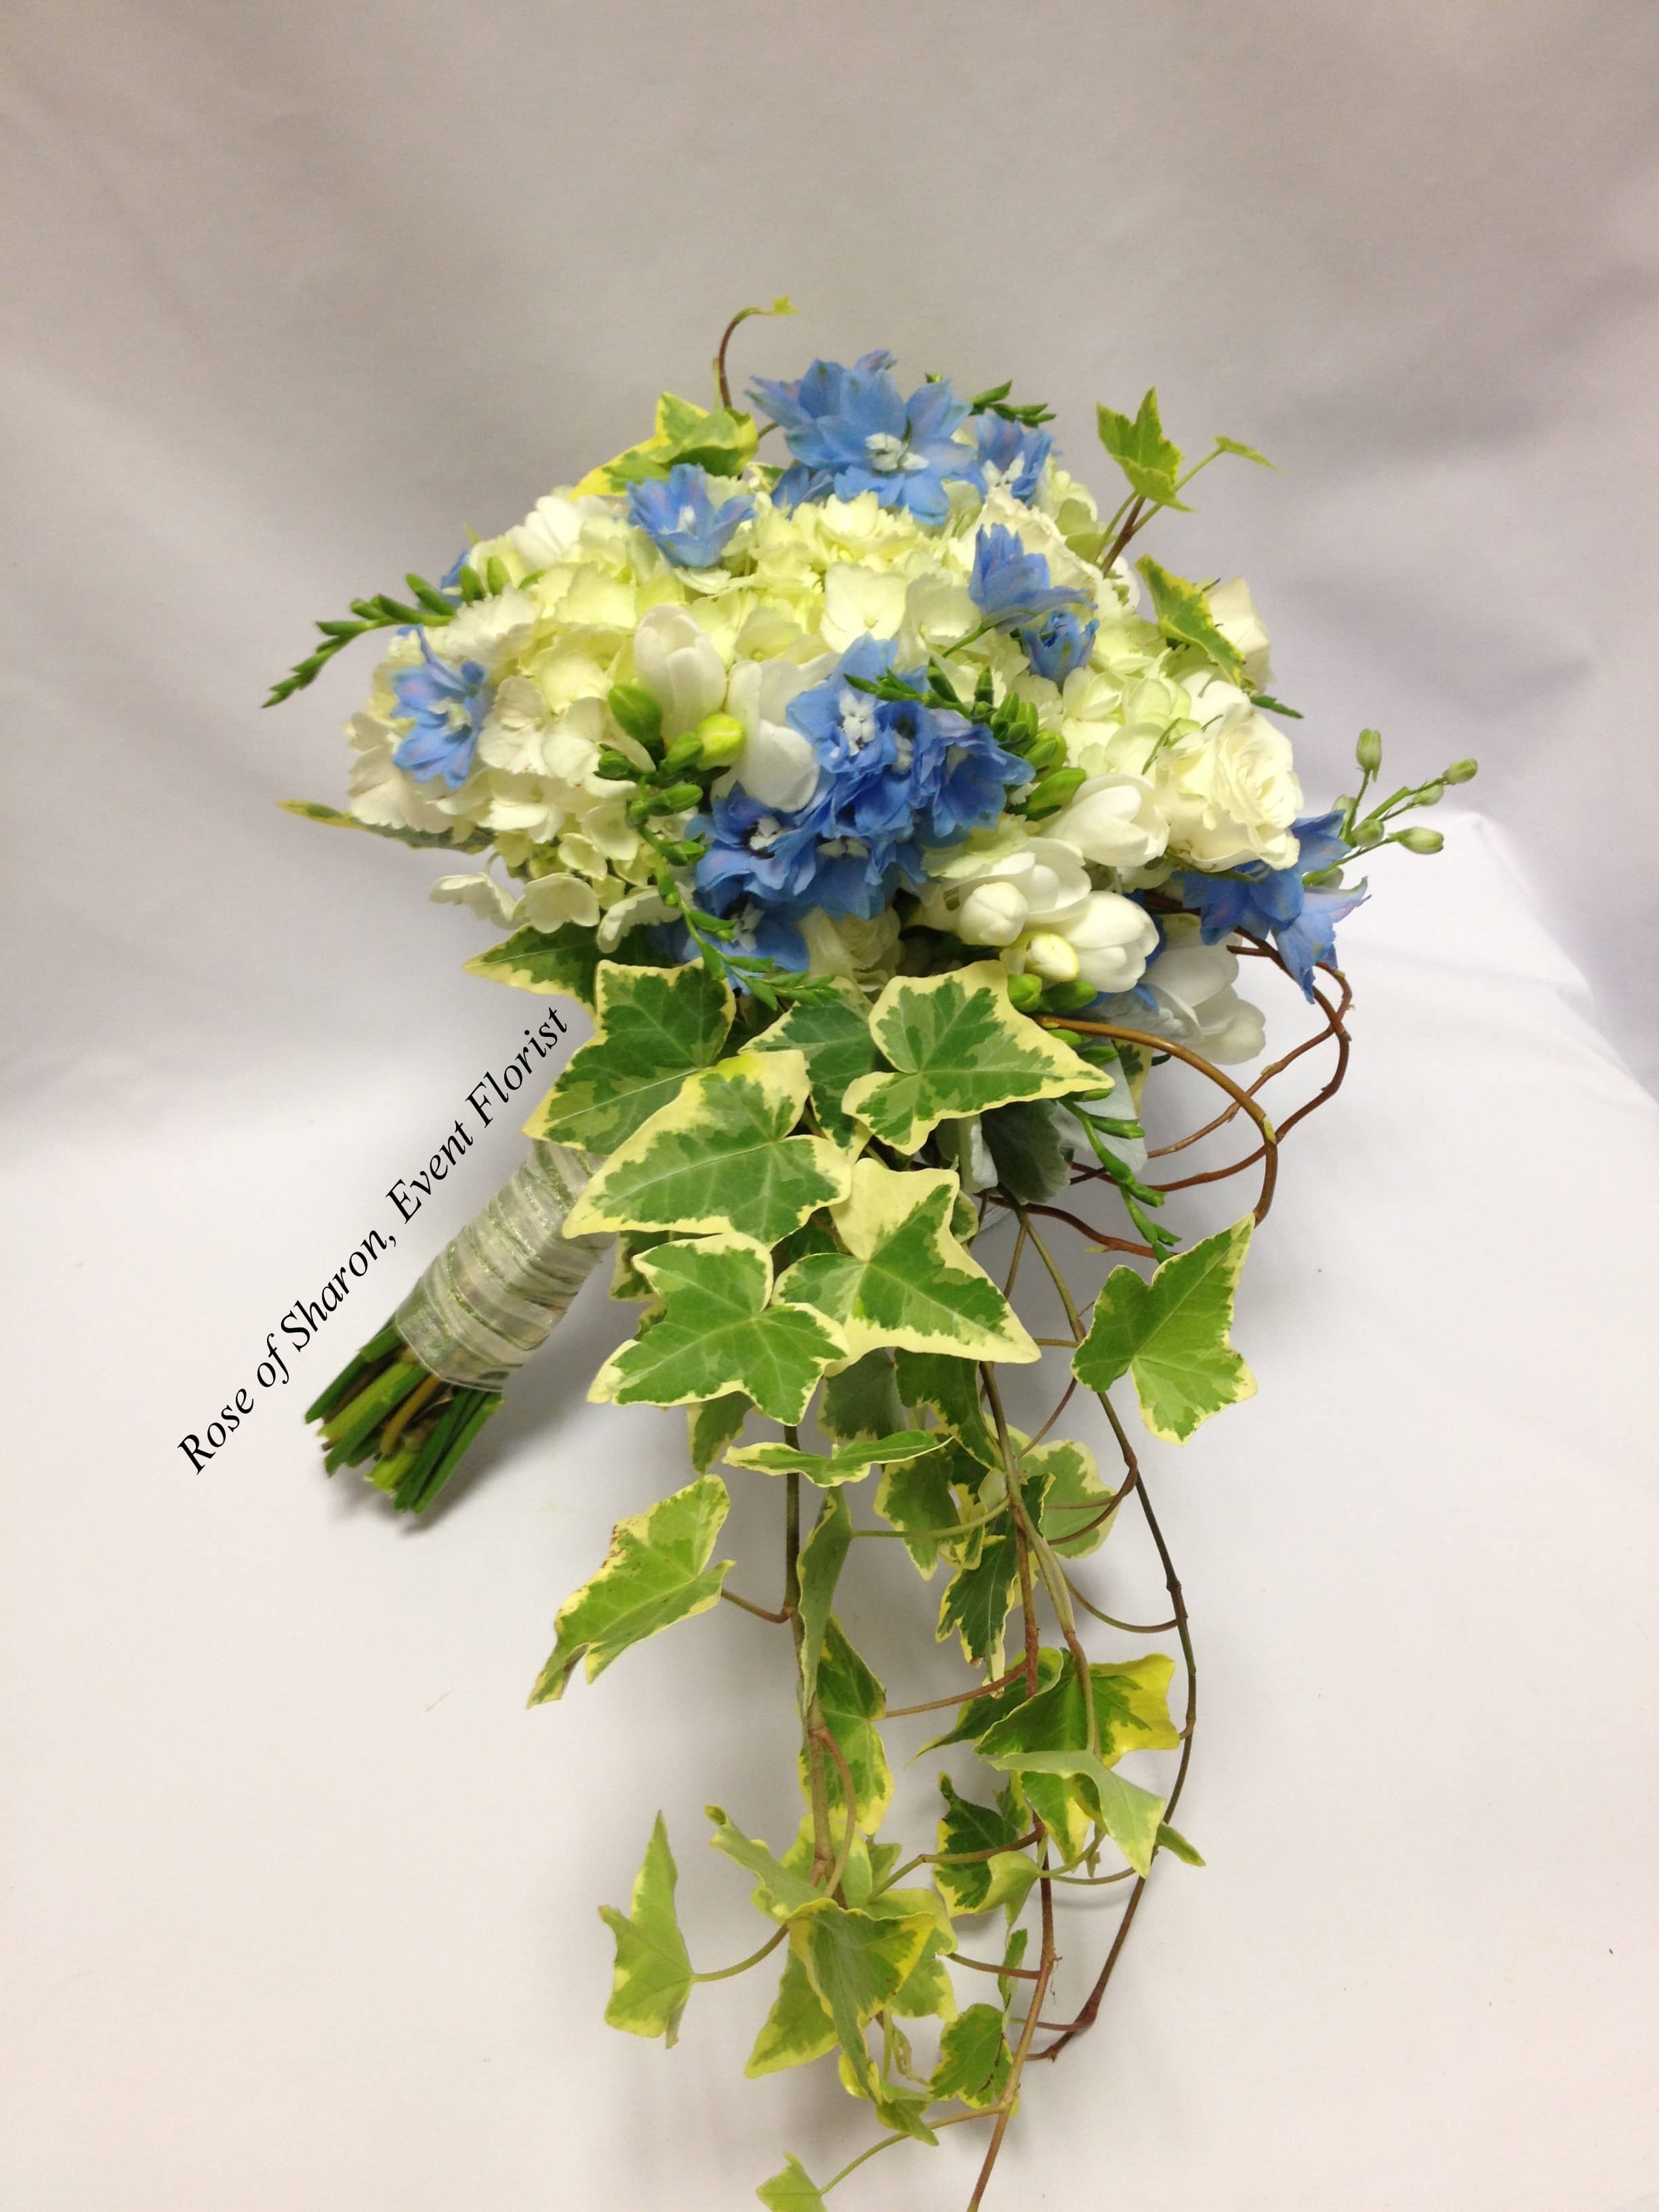 Rose of Sharon Floral Design Studio - Fayetteville, AR, US, cheap florist